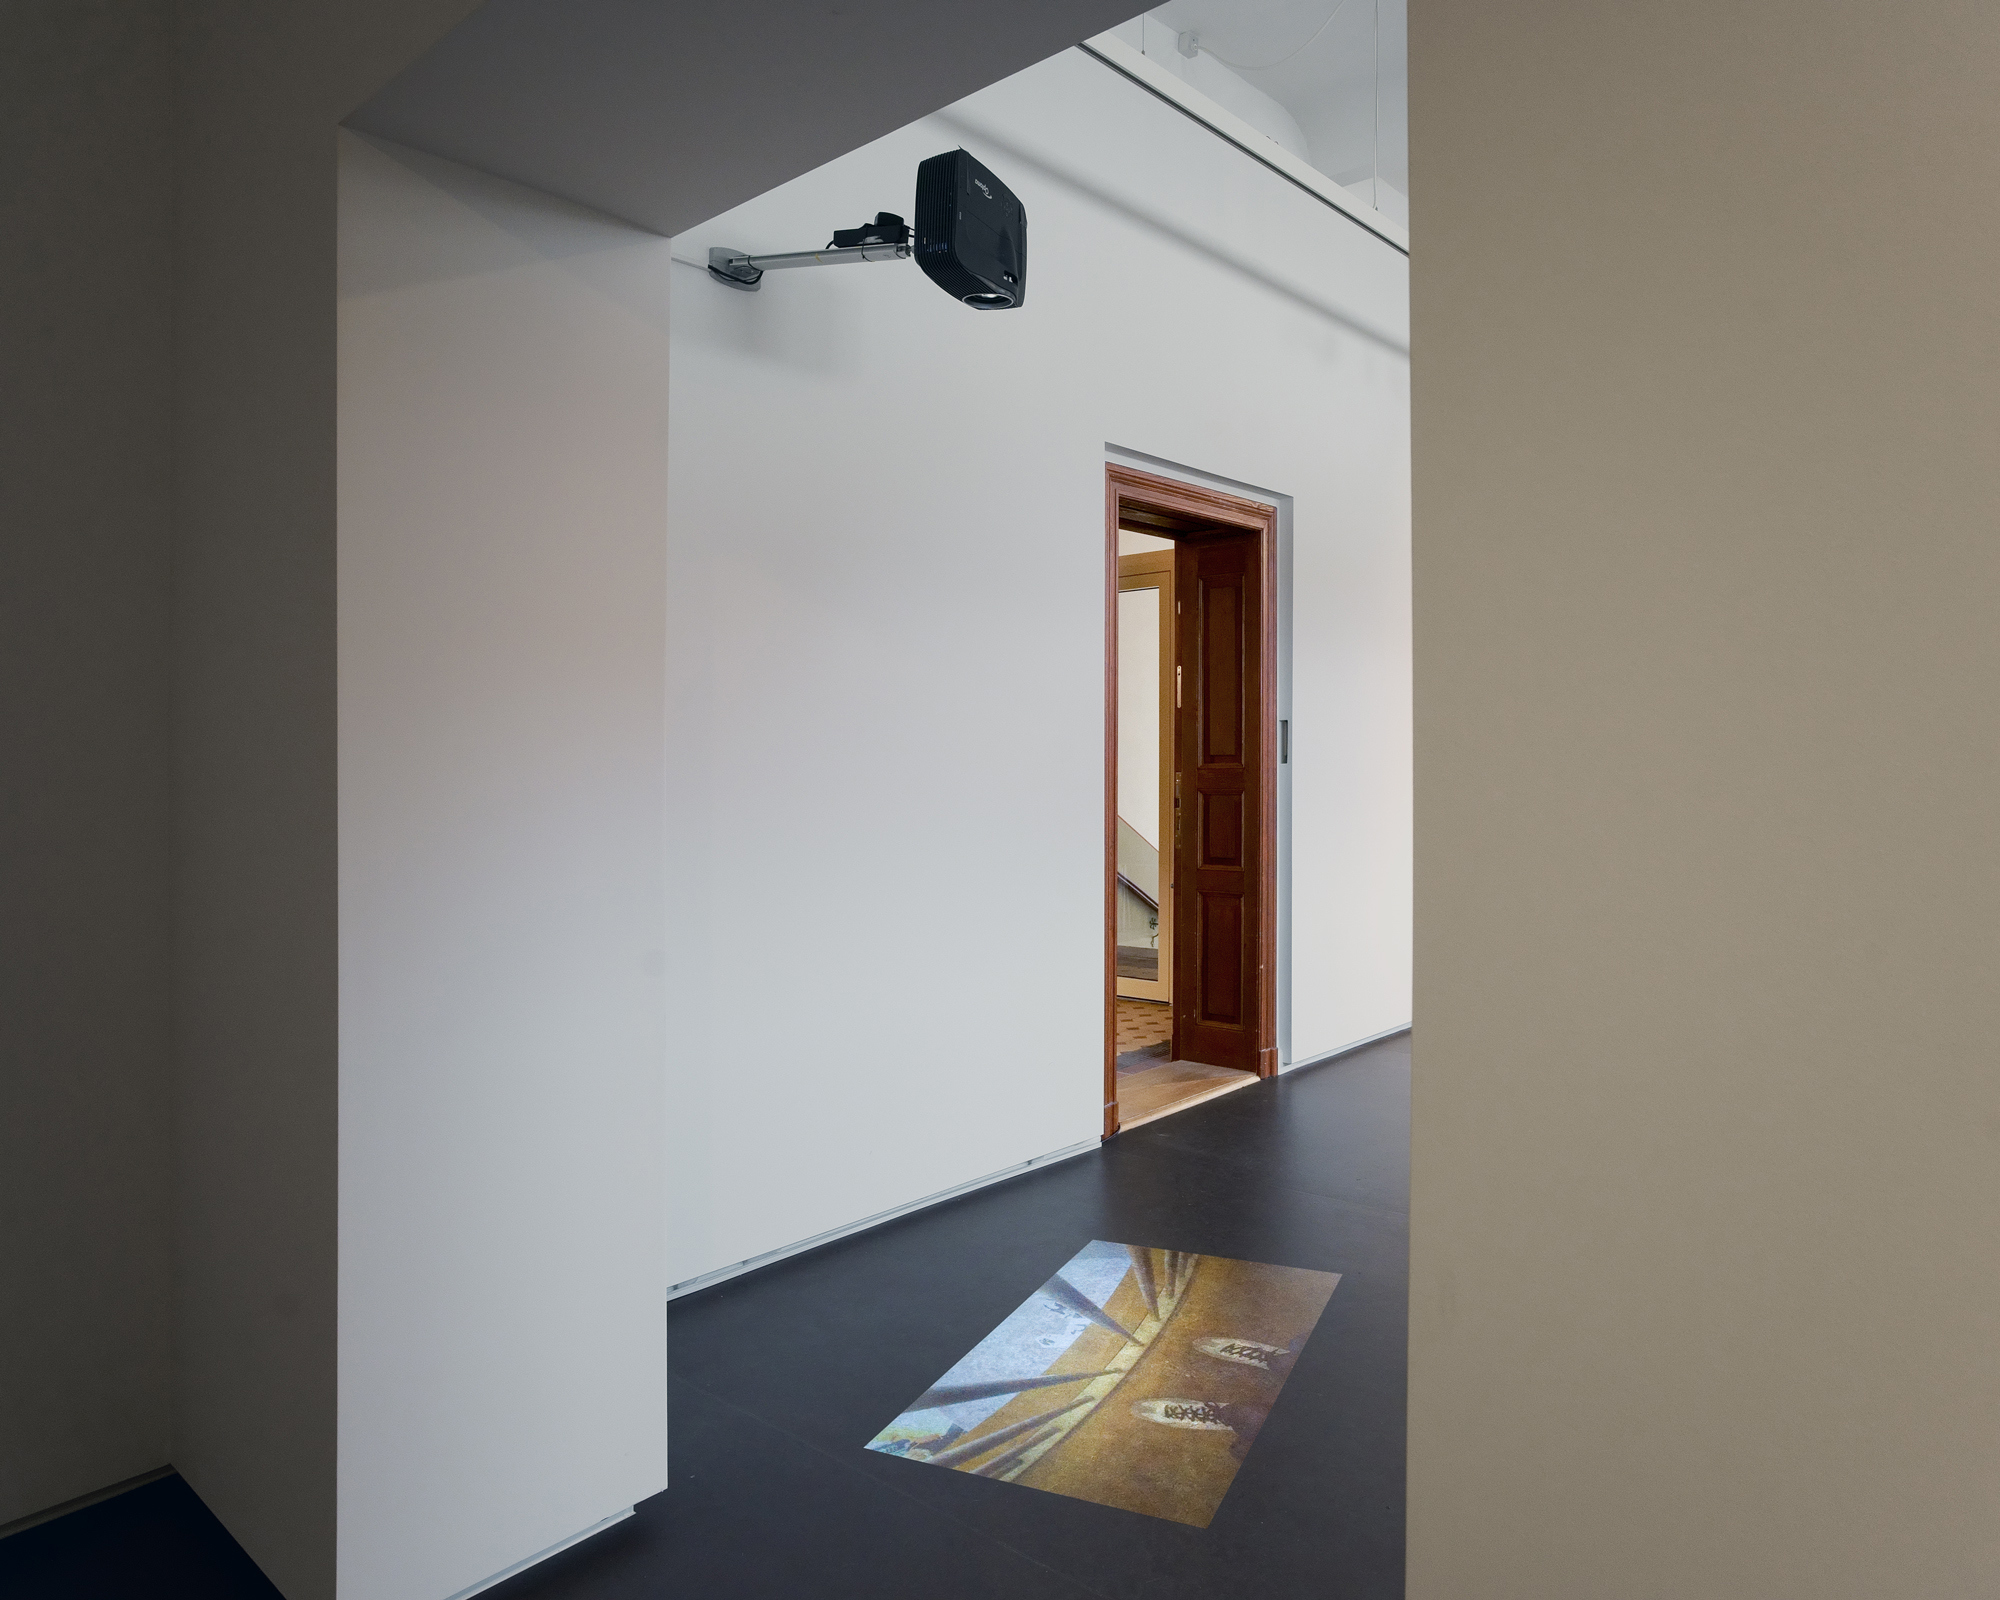 Jáno Möckel, Orbit, 2018/23, hd-video installation, exhibition view